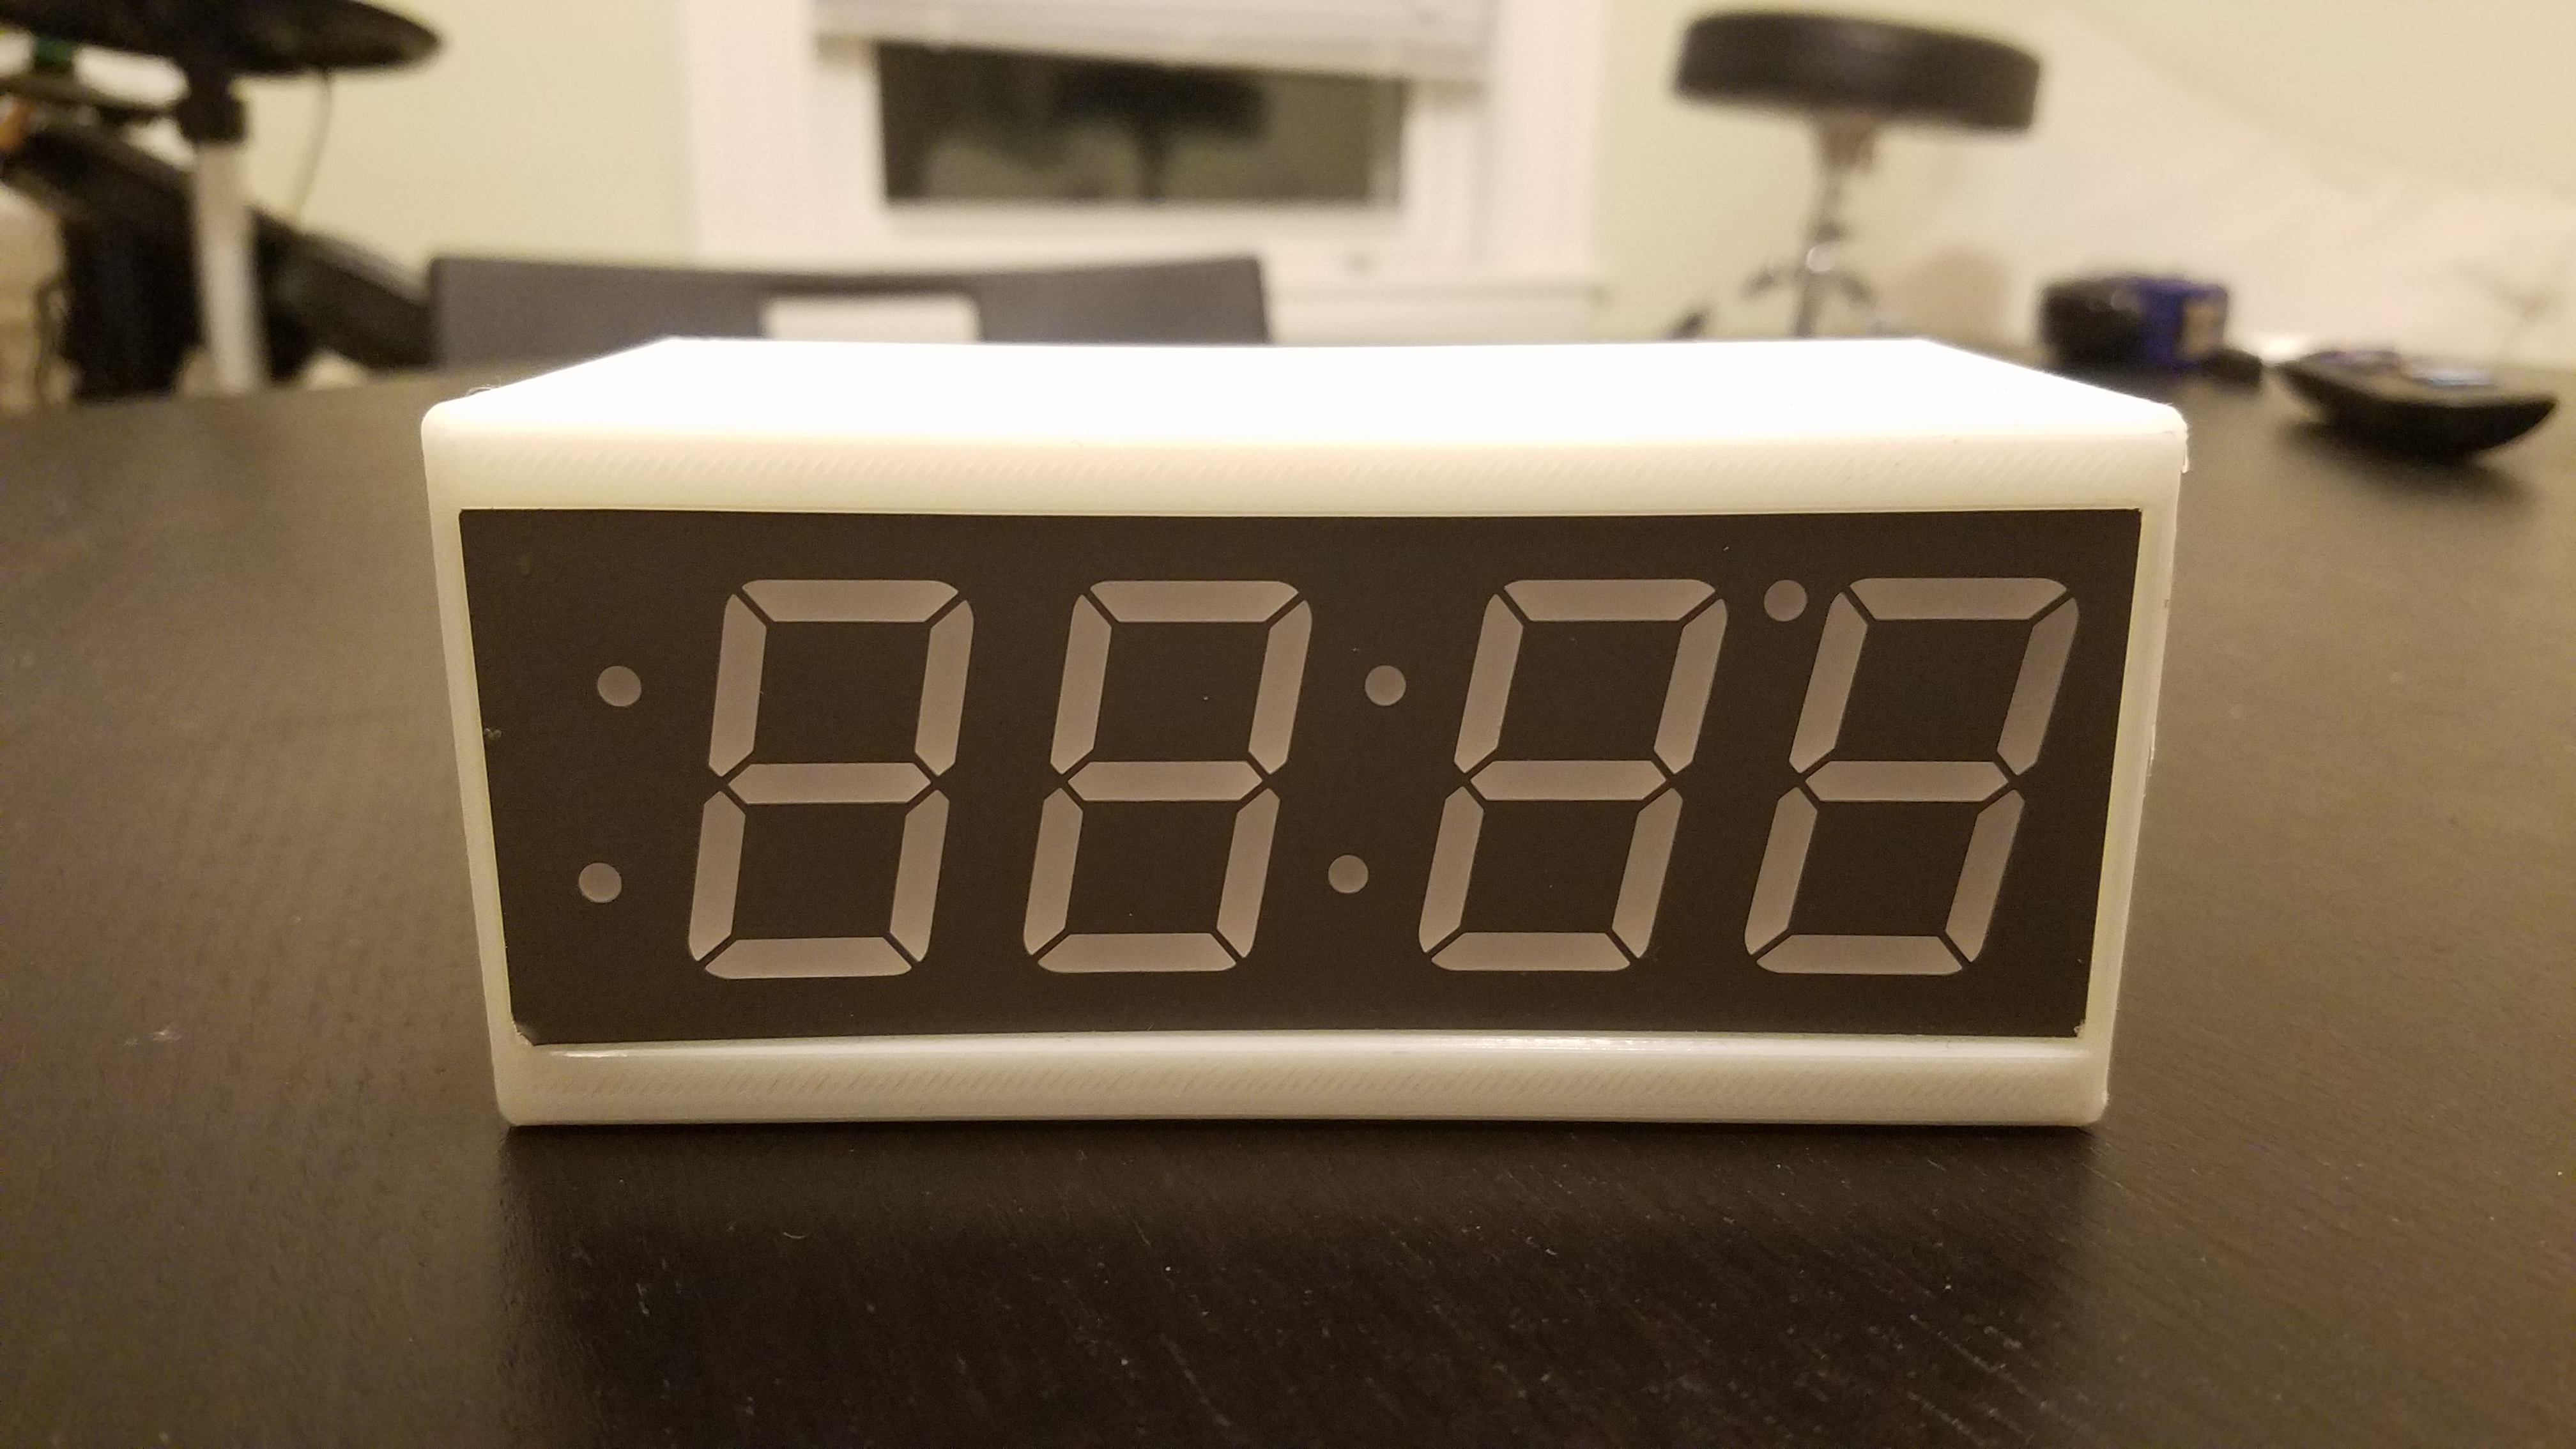 Raspberry Pi Zero Clock